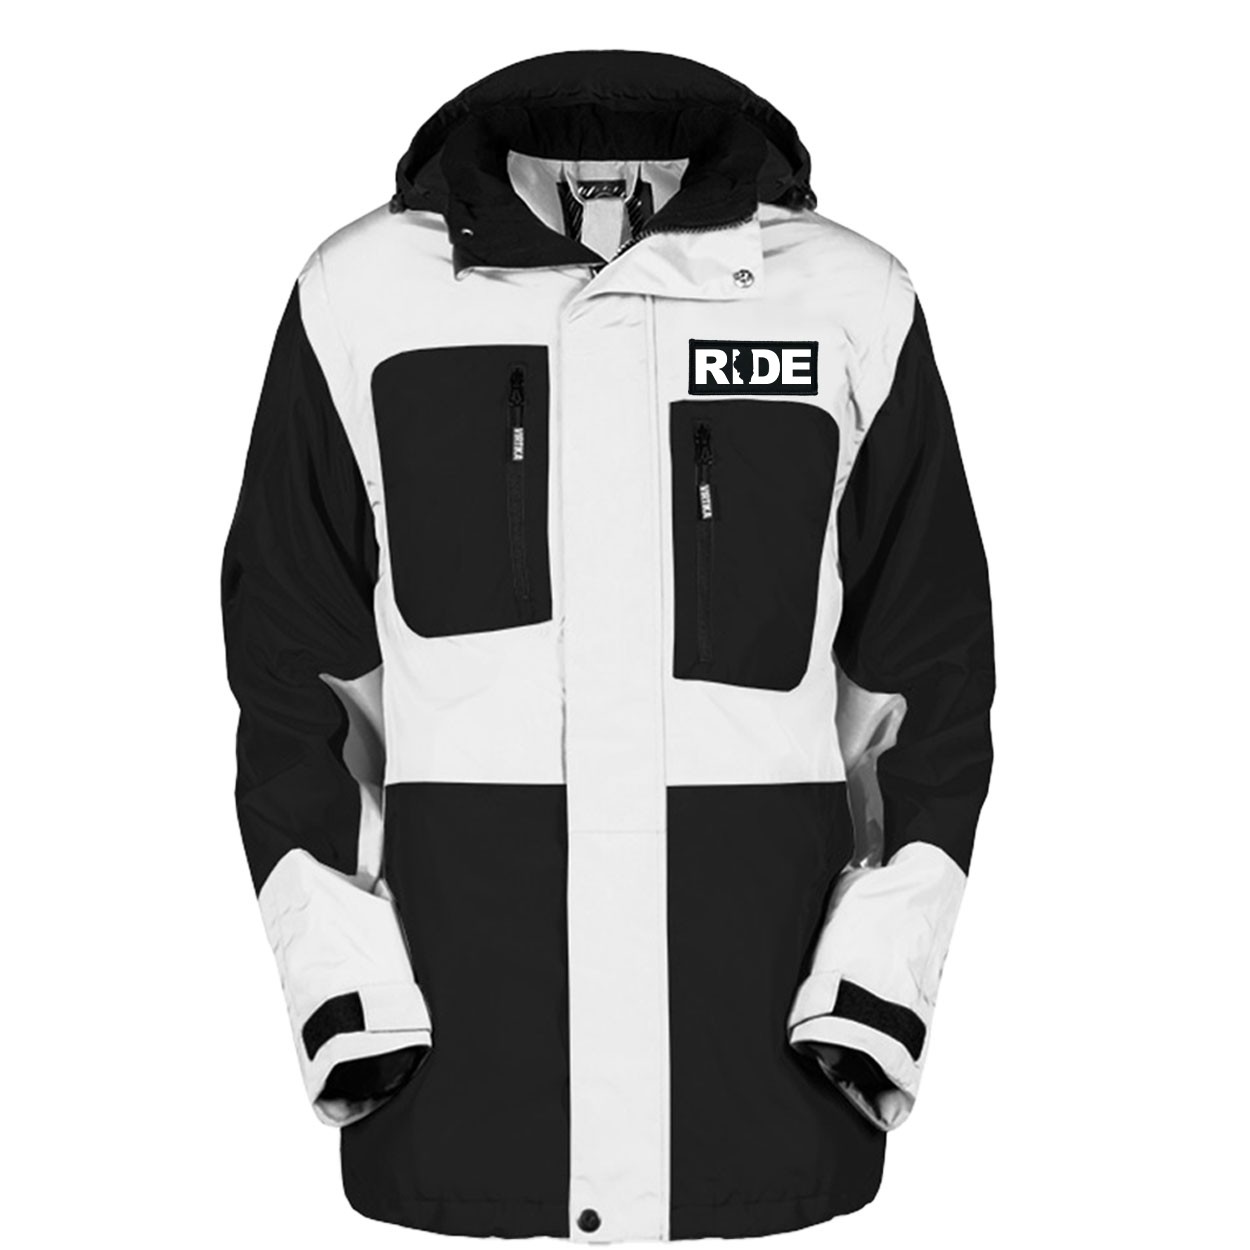 Ride Illinois Classic Woven Patch Pro Snowboard Jacket (Black/White)